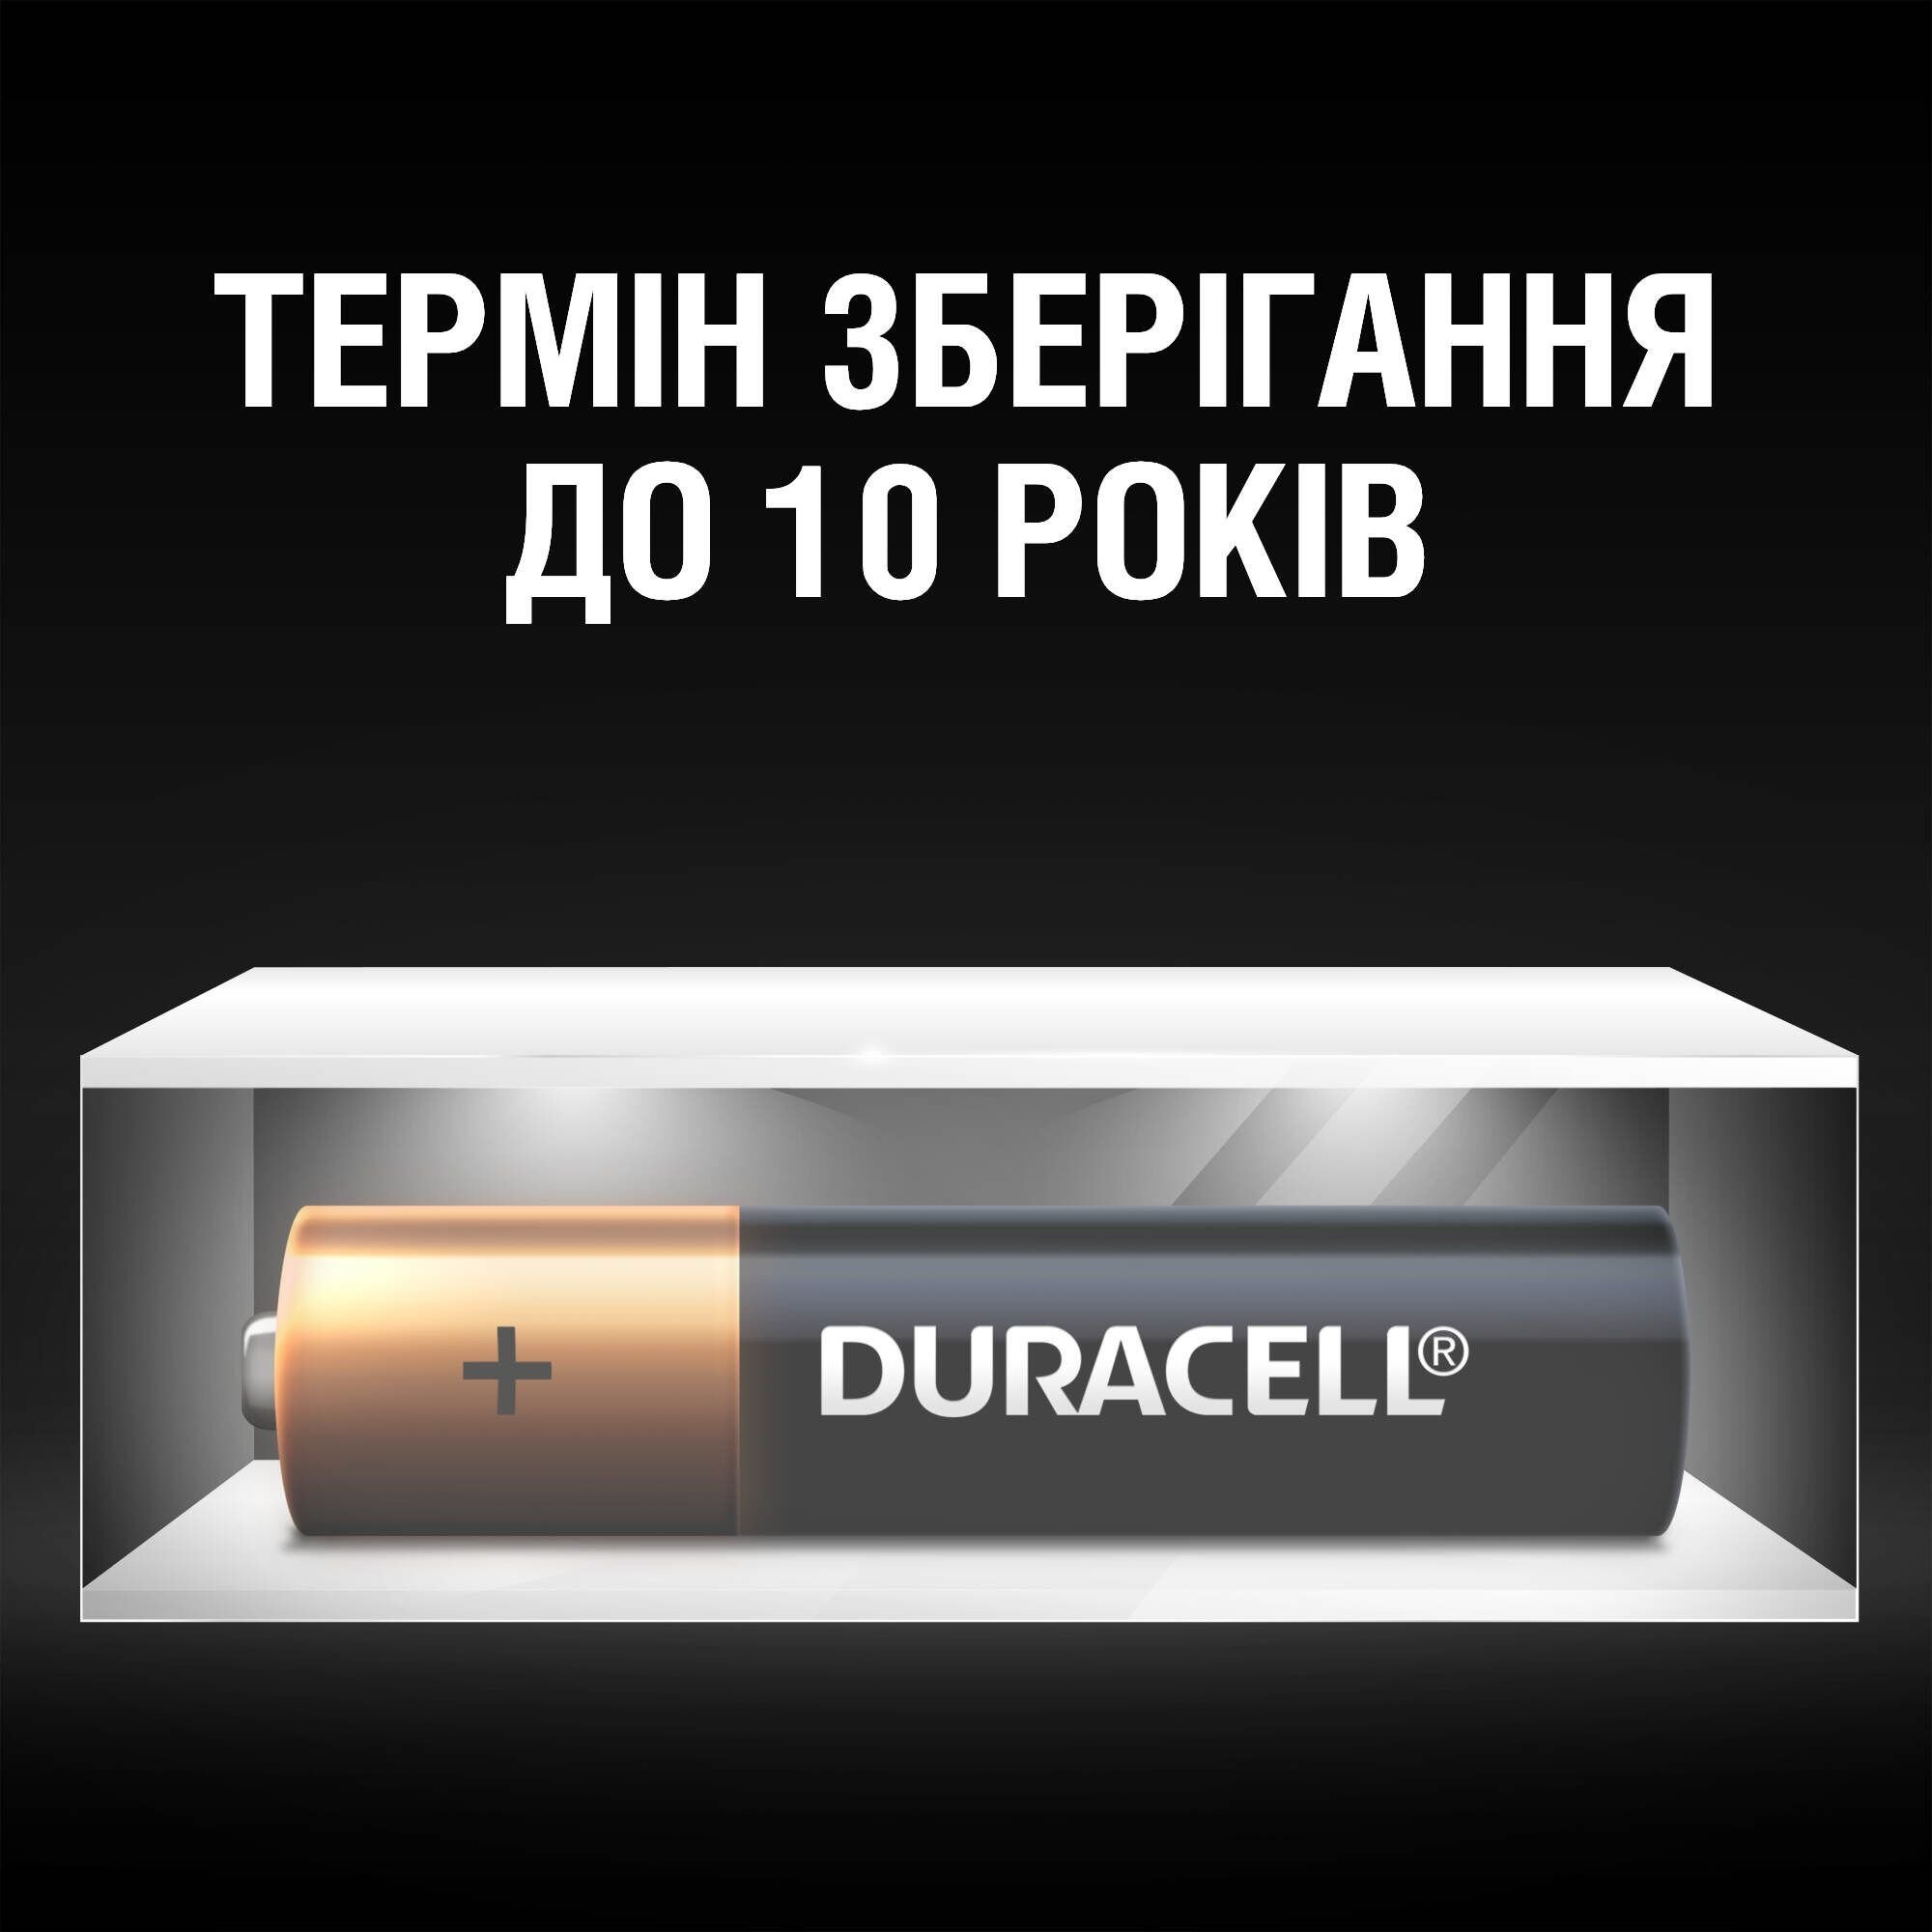 Щелочные батарейки мизинчиковые Duracell 1,5 V AAA LR03/MN2400, 12 шт. - фото 6